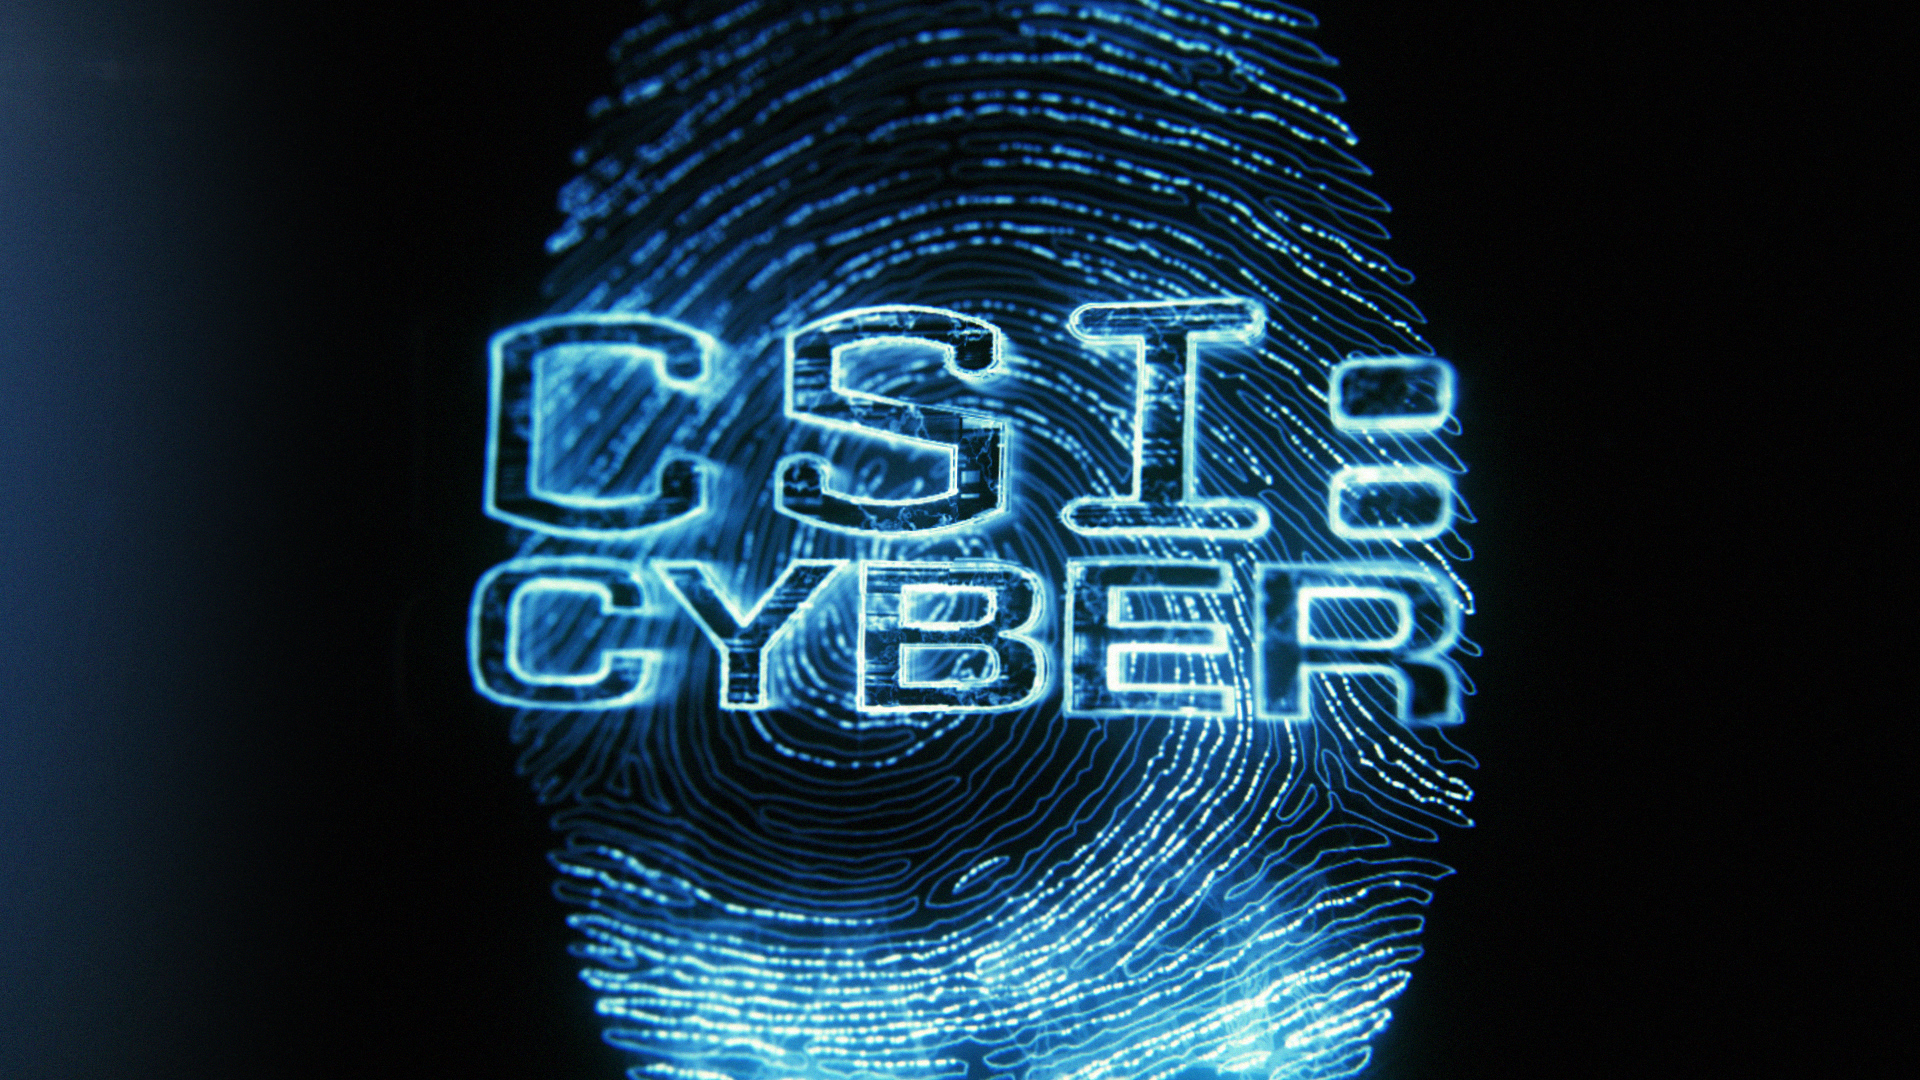 Csi: Cyber Wallpapers